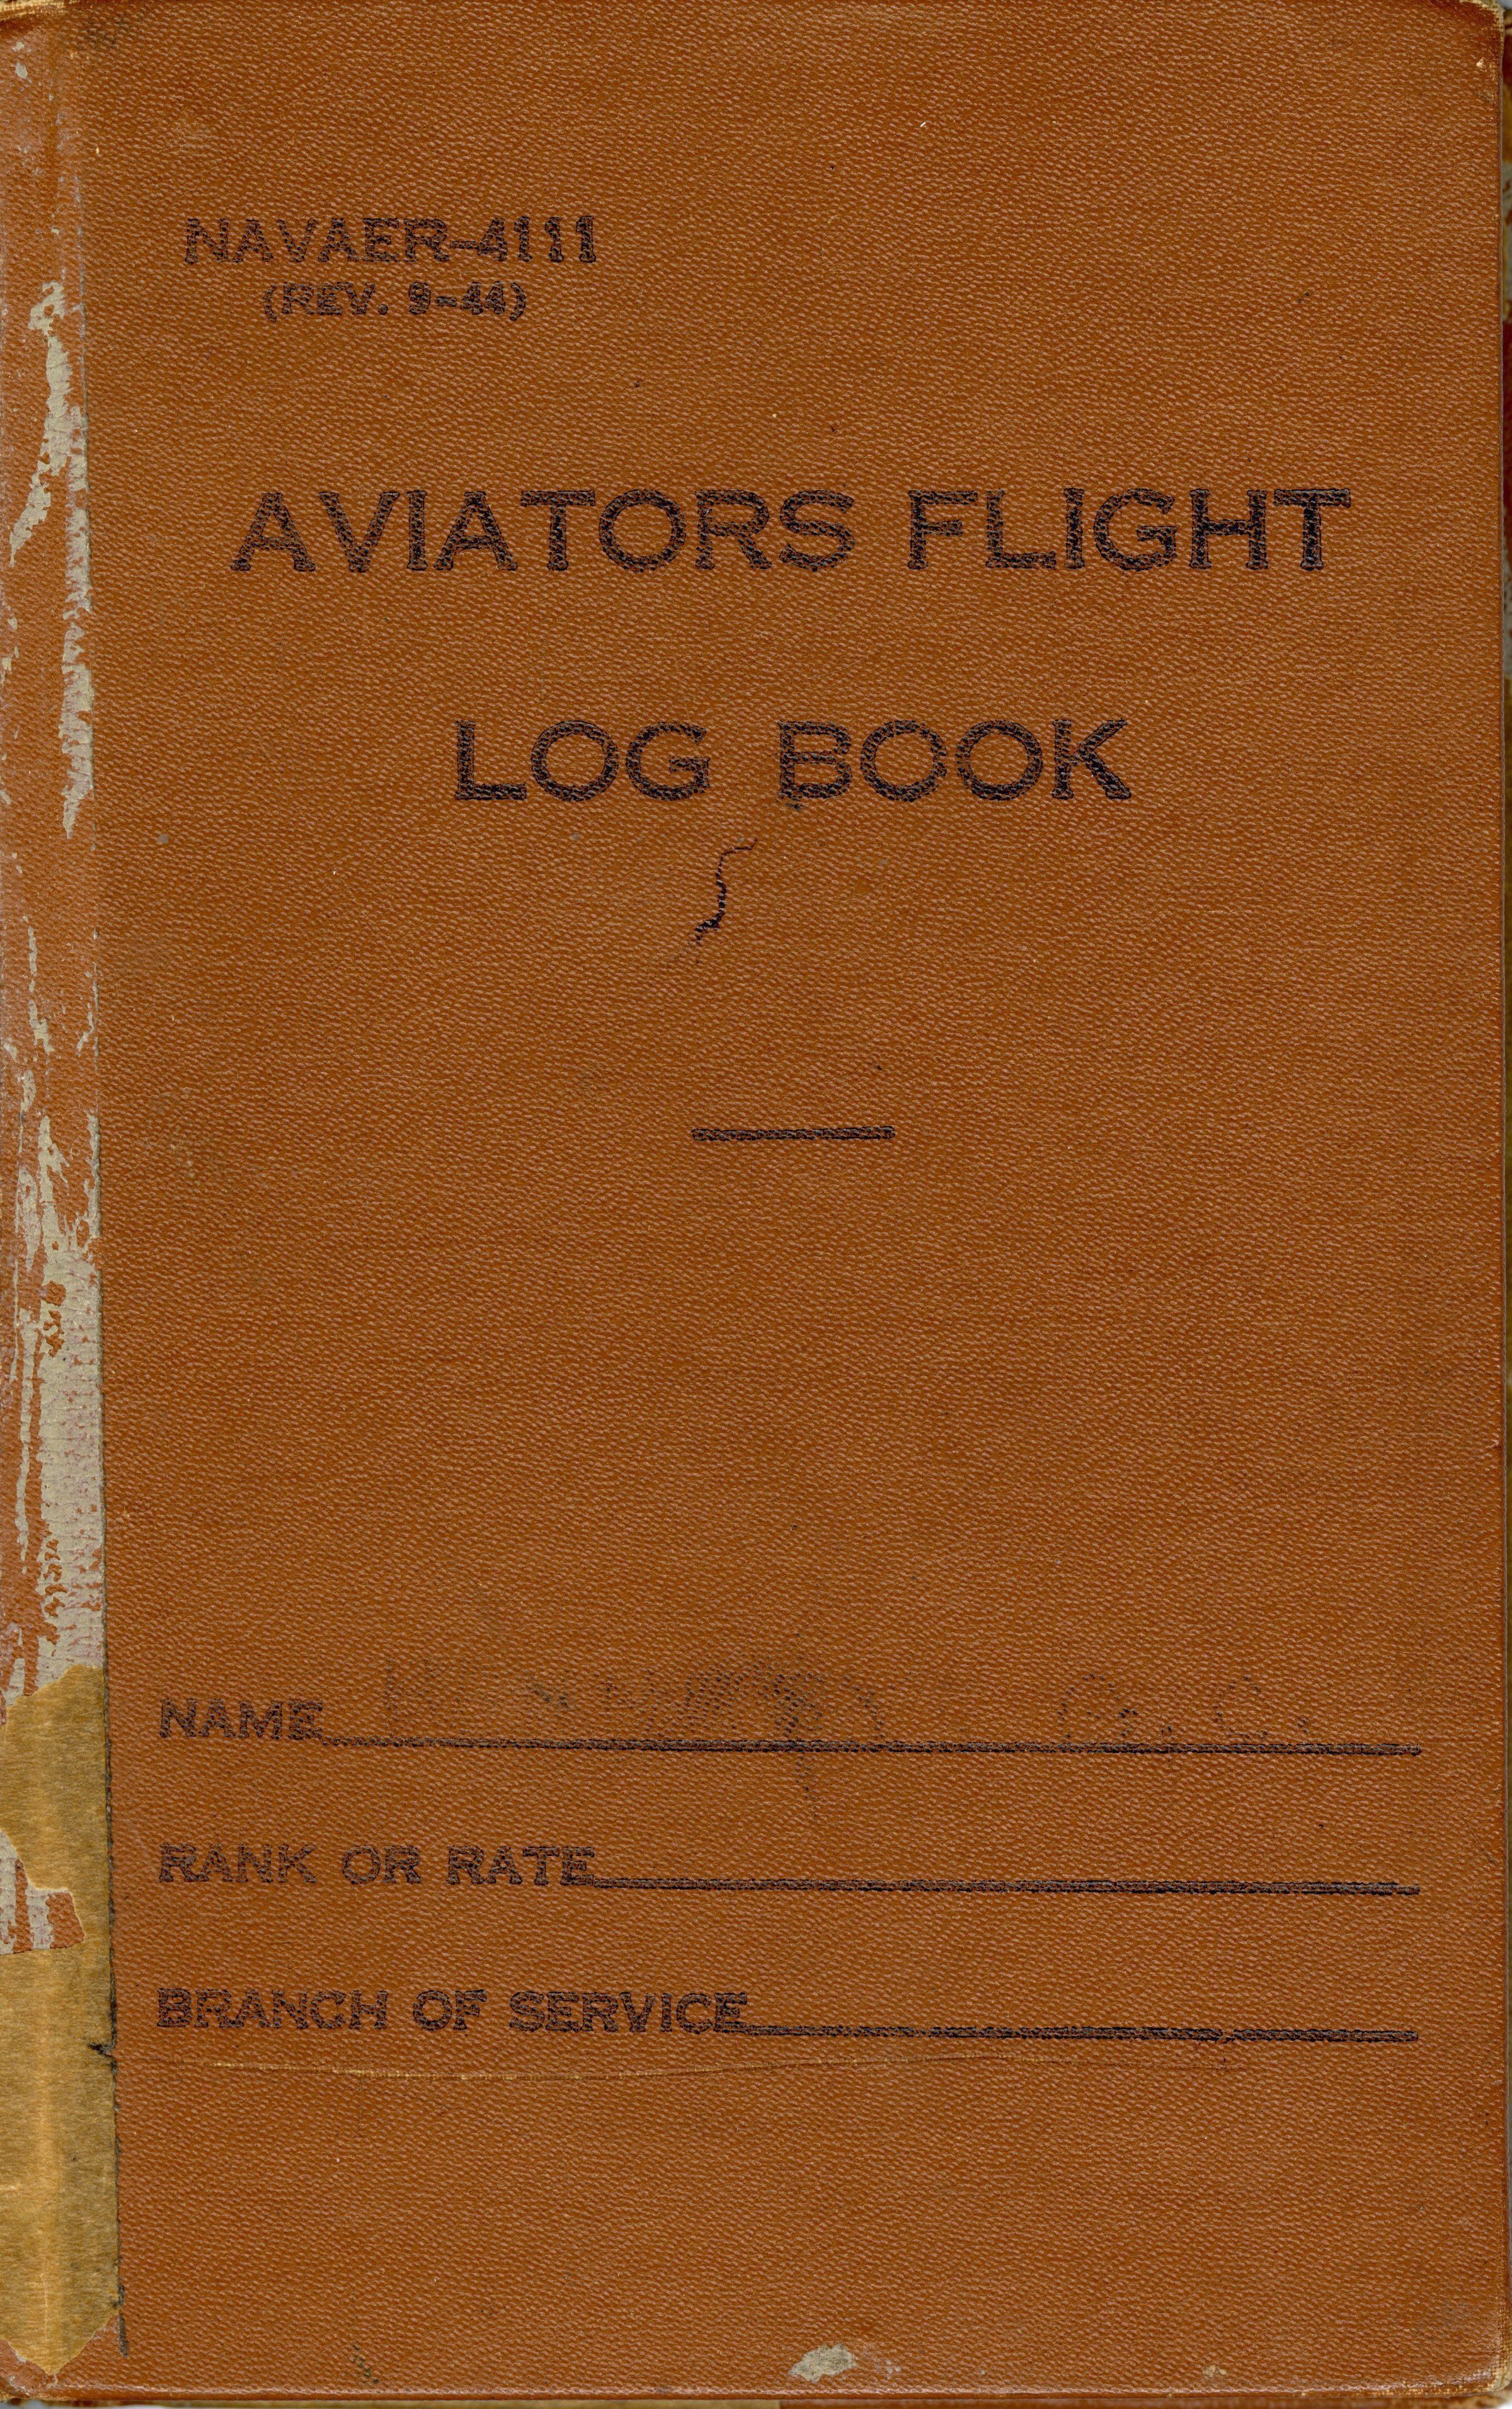 Primary Image of Aviators Flight Log Book of Gerald Hennesy (1950-1958)